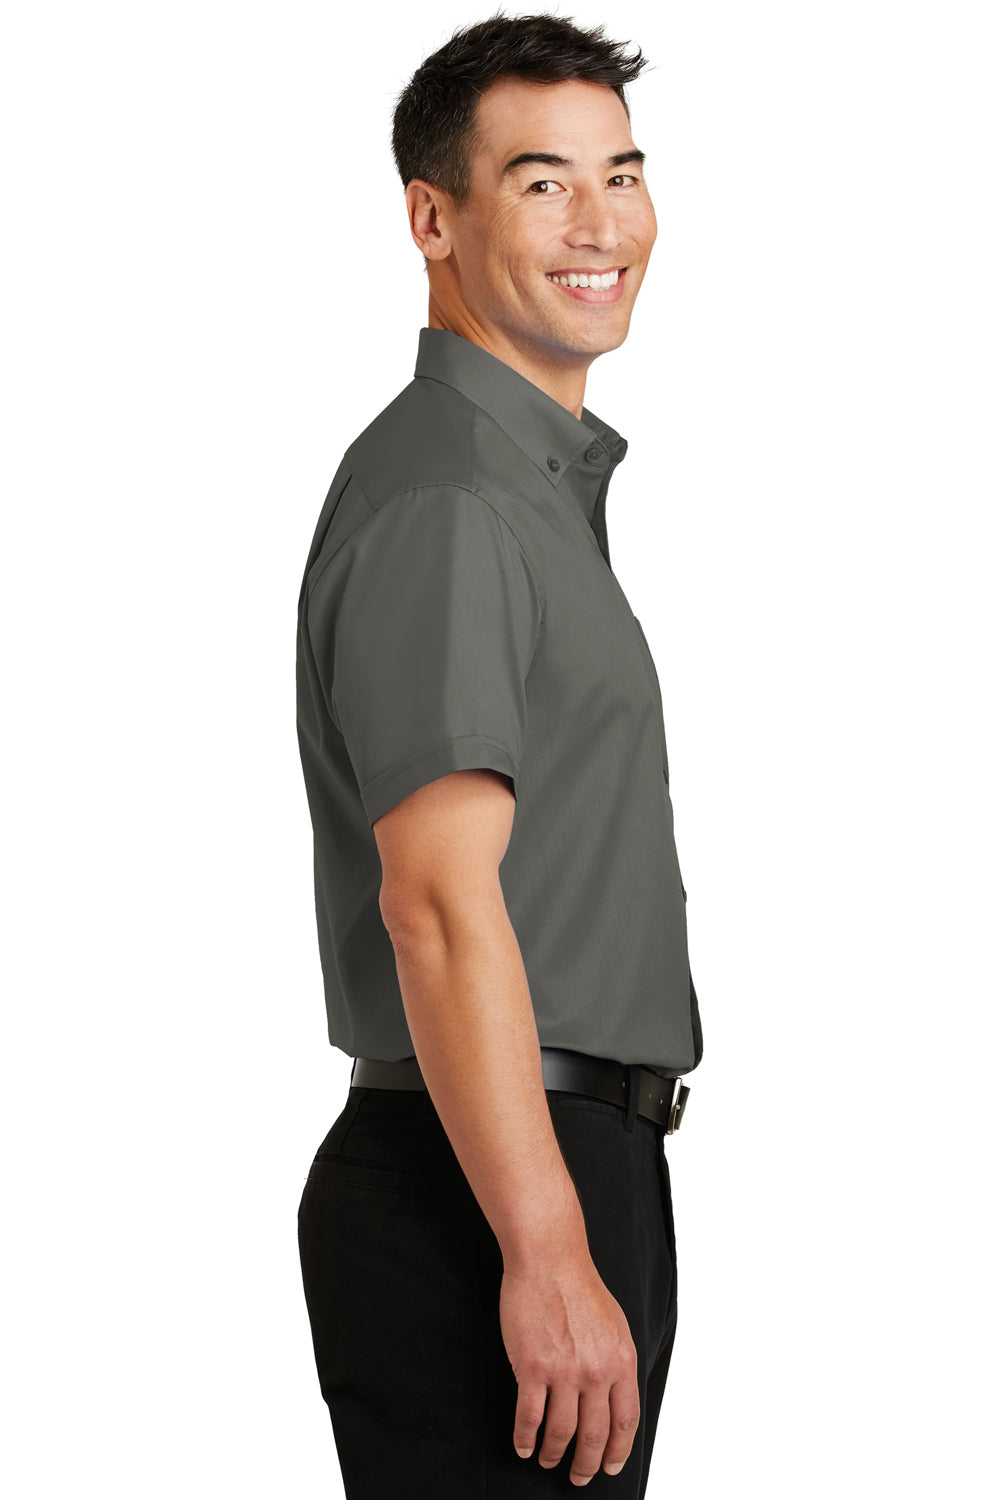 Port Authority S664 Mens SuperPro Wrinkle Resistant Short Sleeve Button Down Shirt w/ Pocket Sterling Grey Side